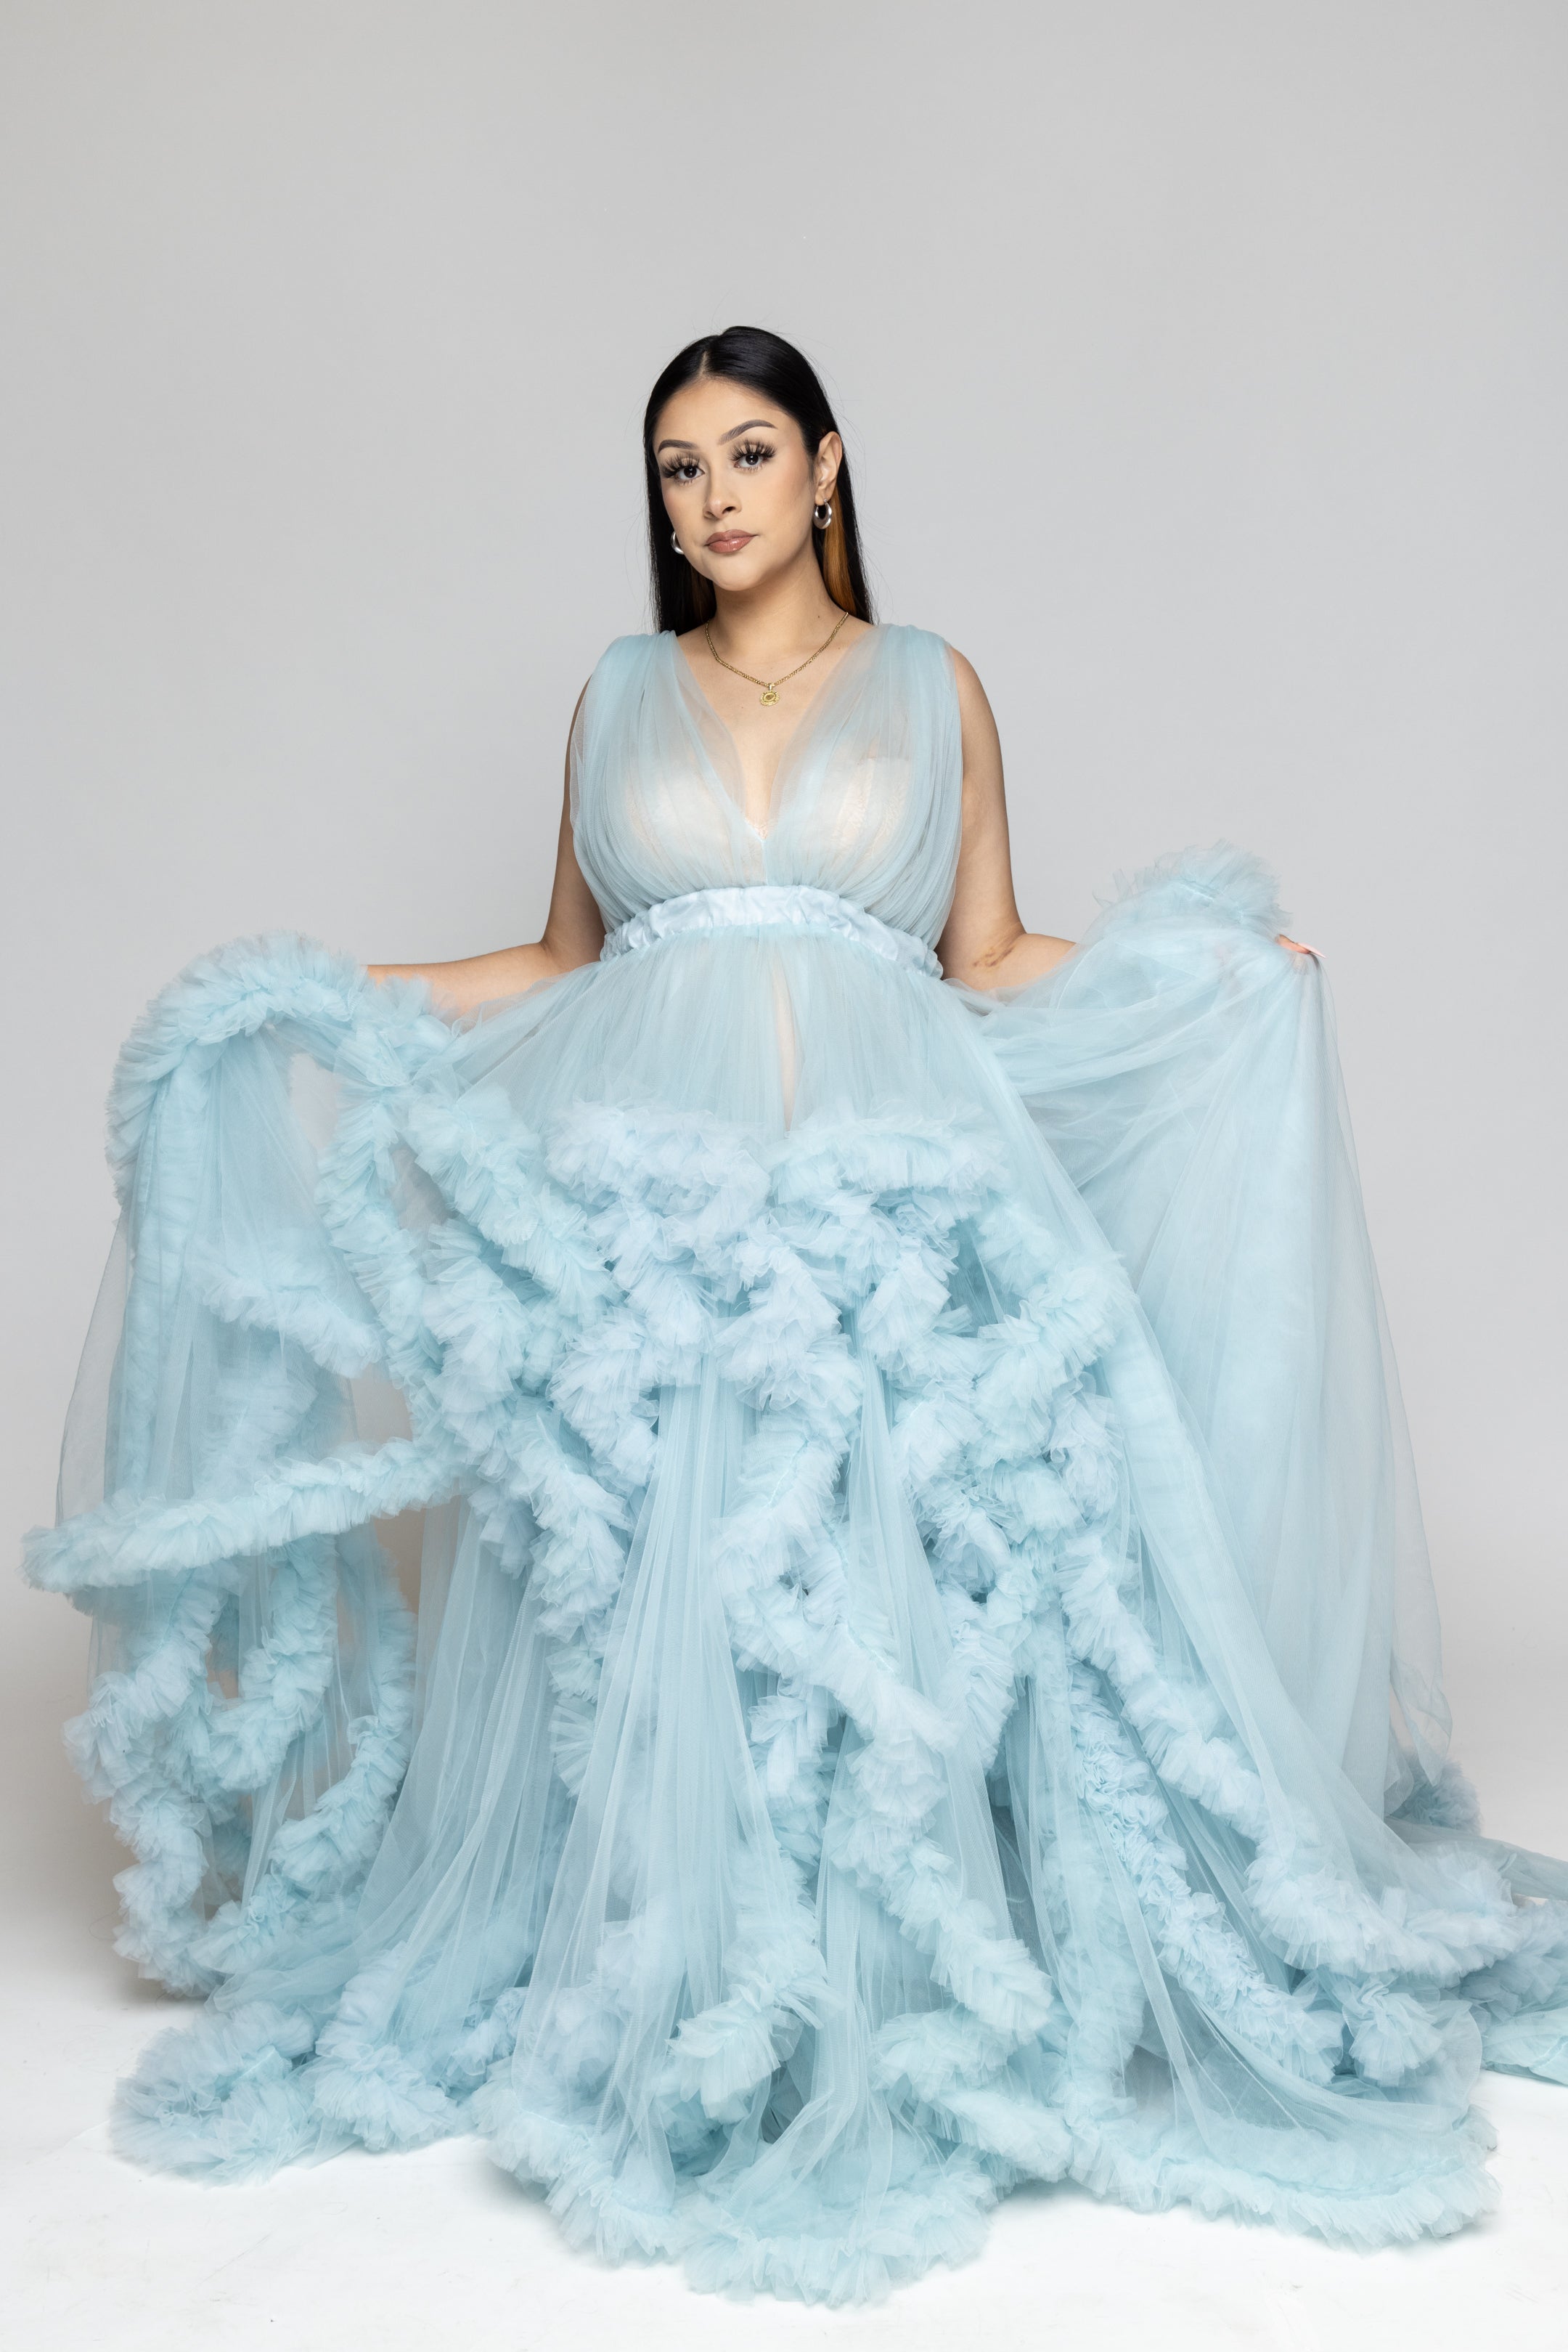 Cinderella Dress - Light Blue